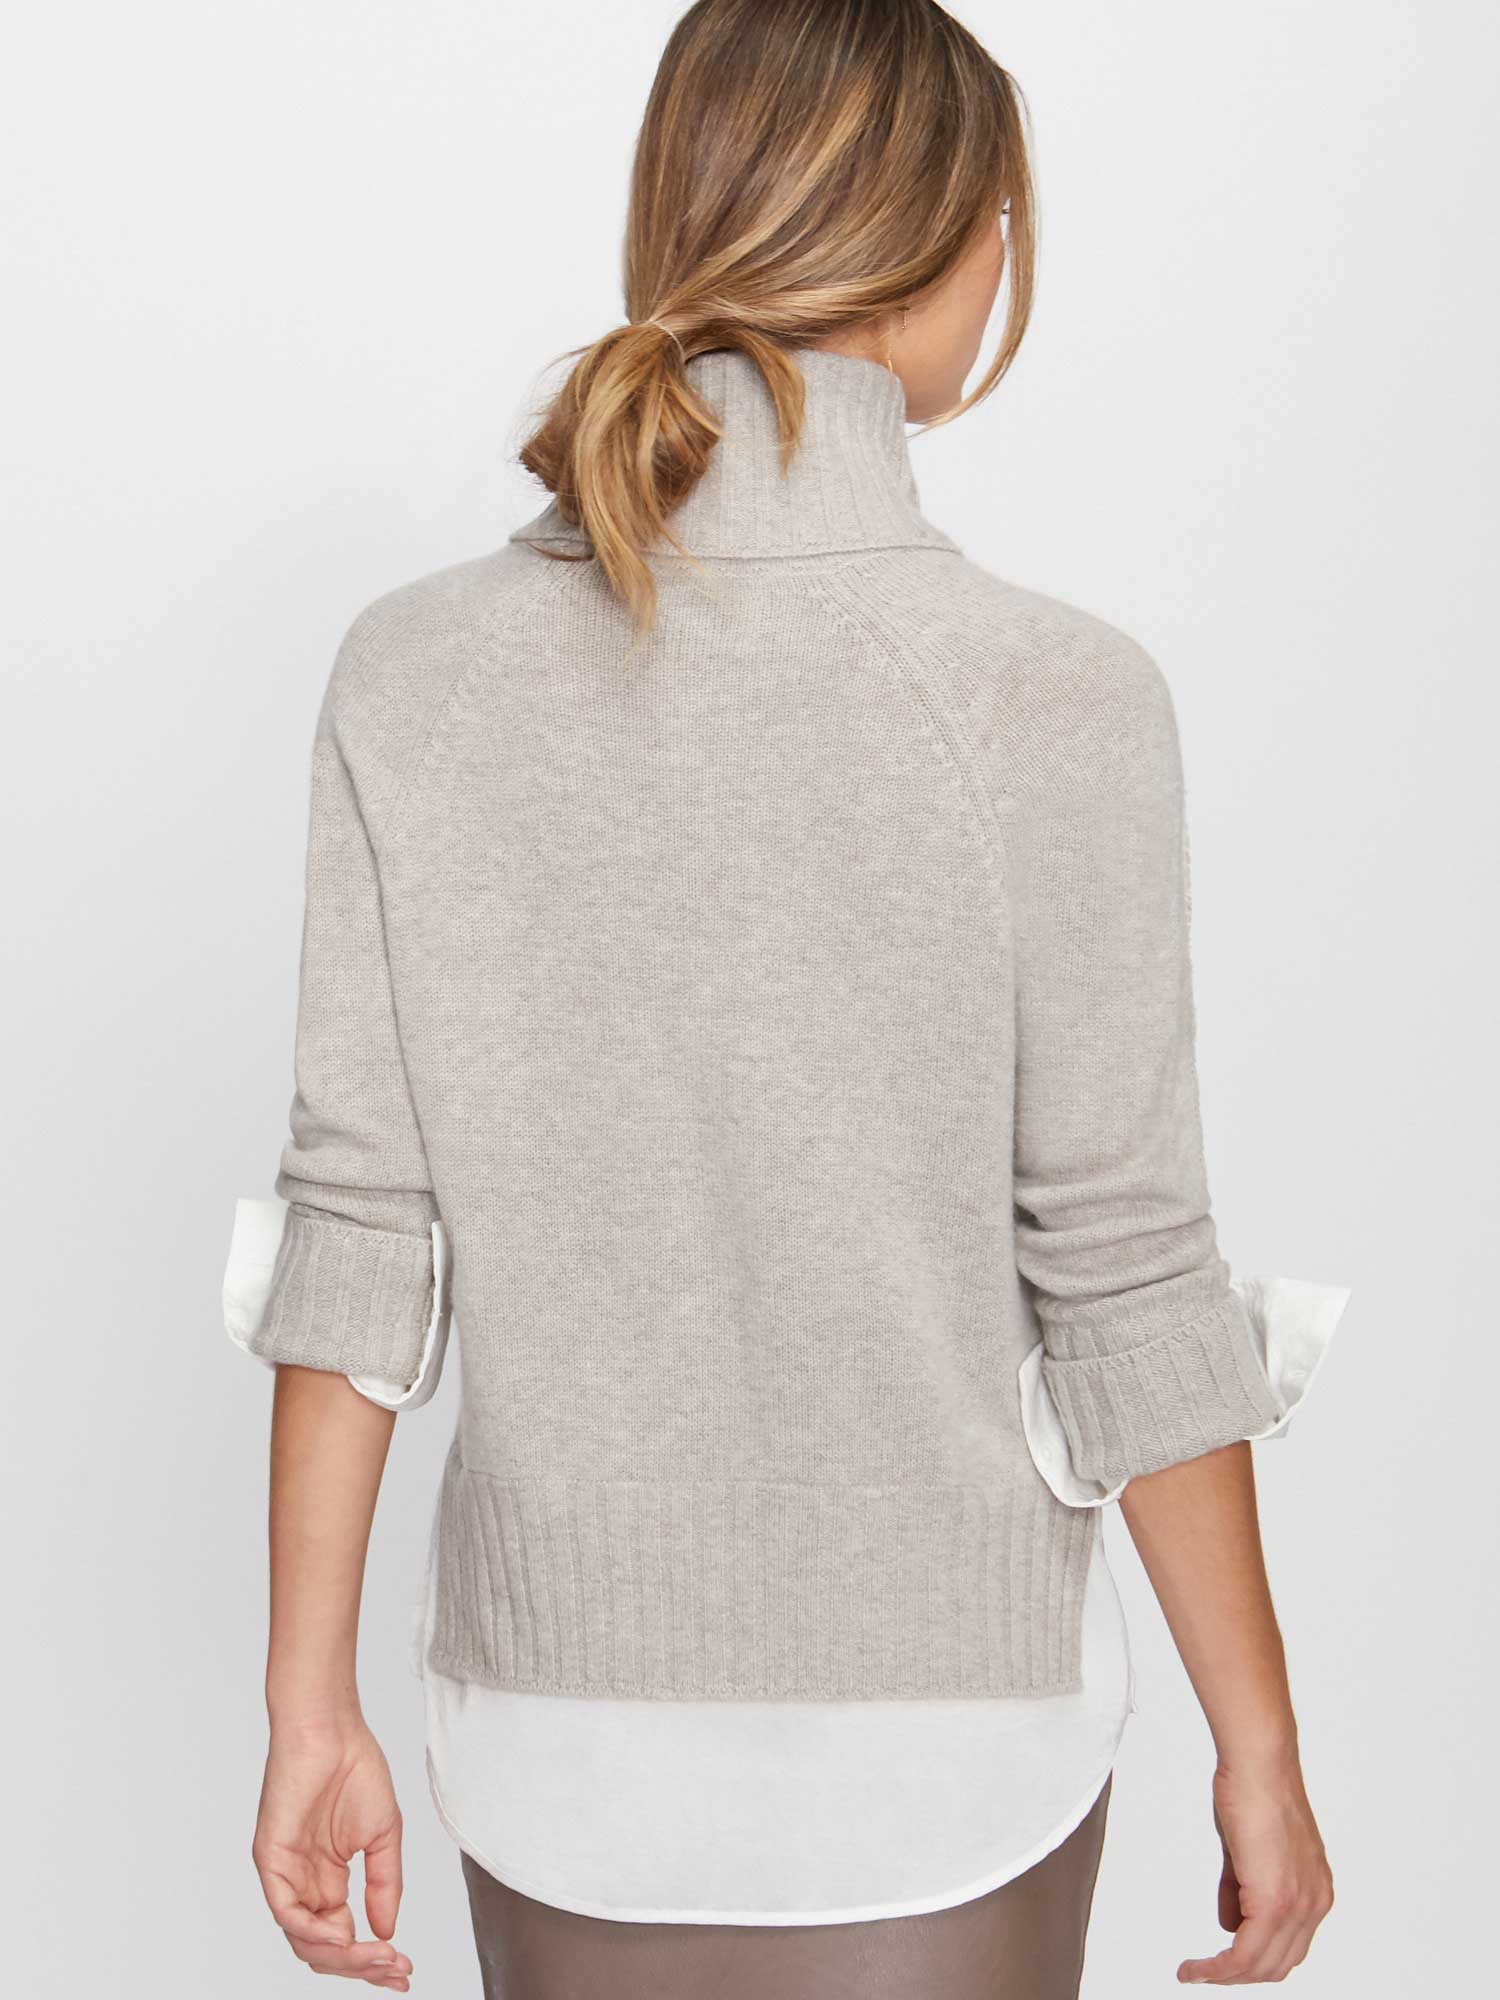 Jolie light grey layered turtleneck sweater back view